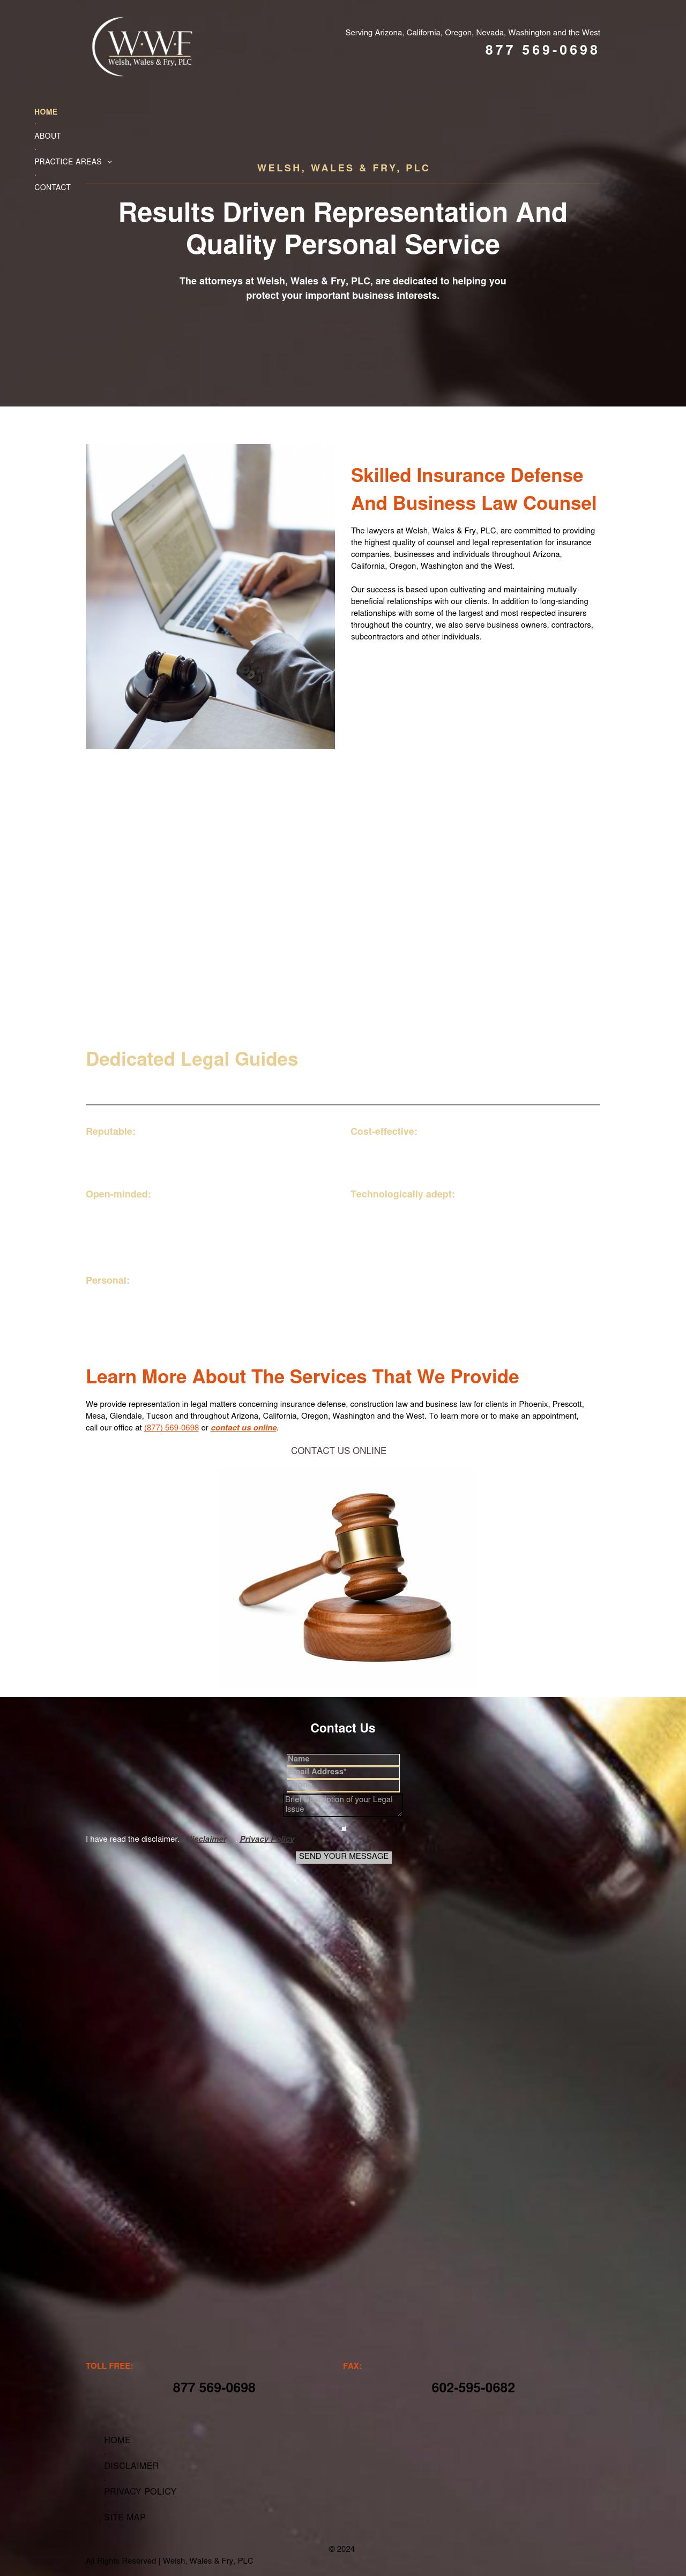 Welsh Law Group, PLC - Phoenix AZ Lawyers